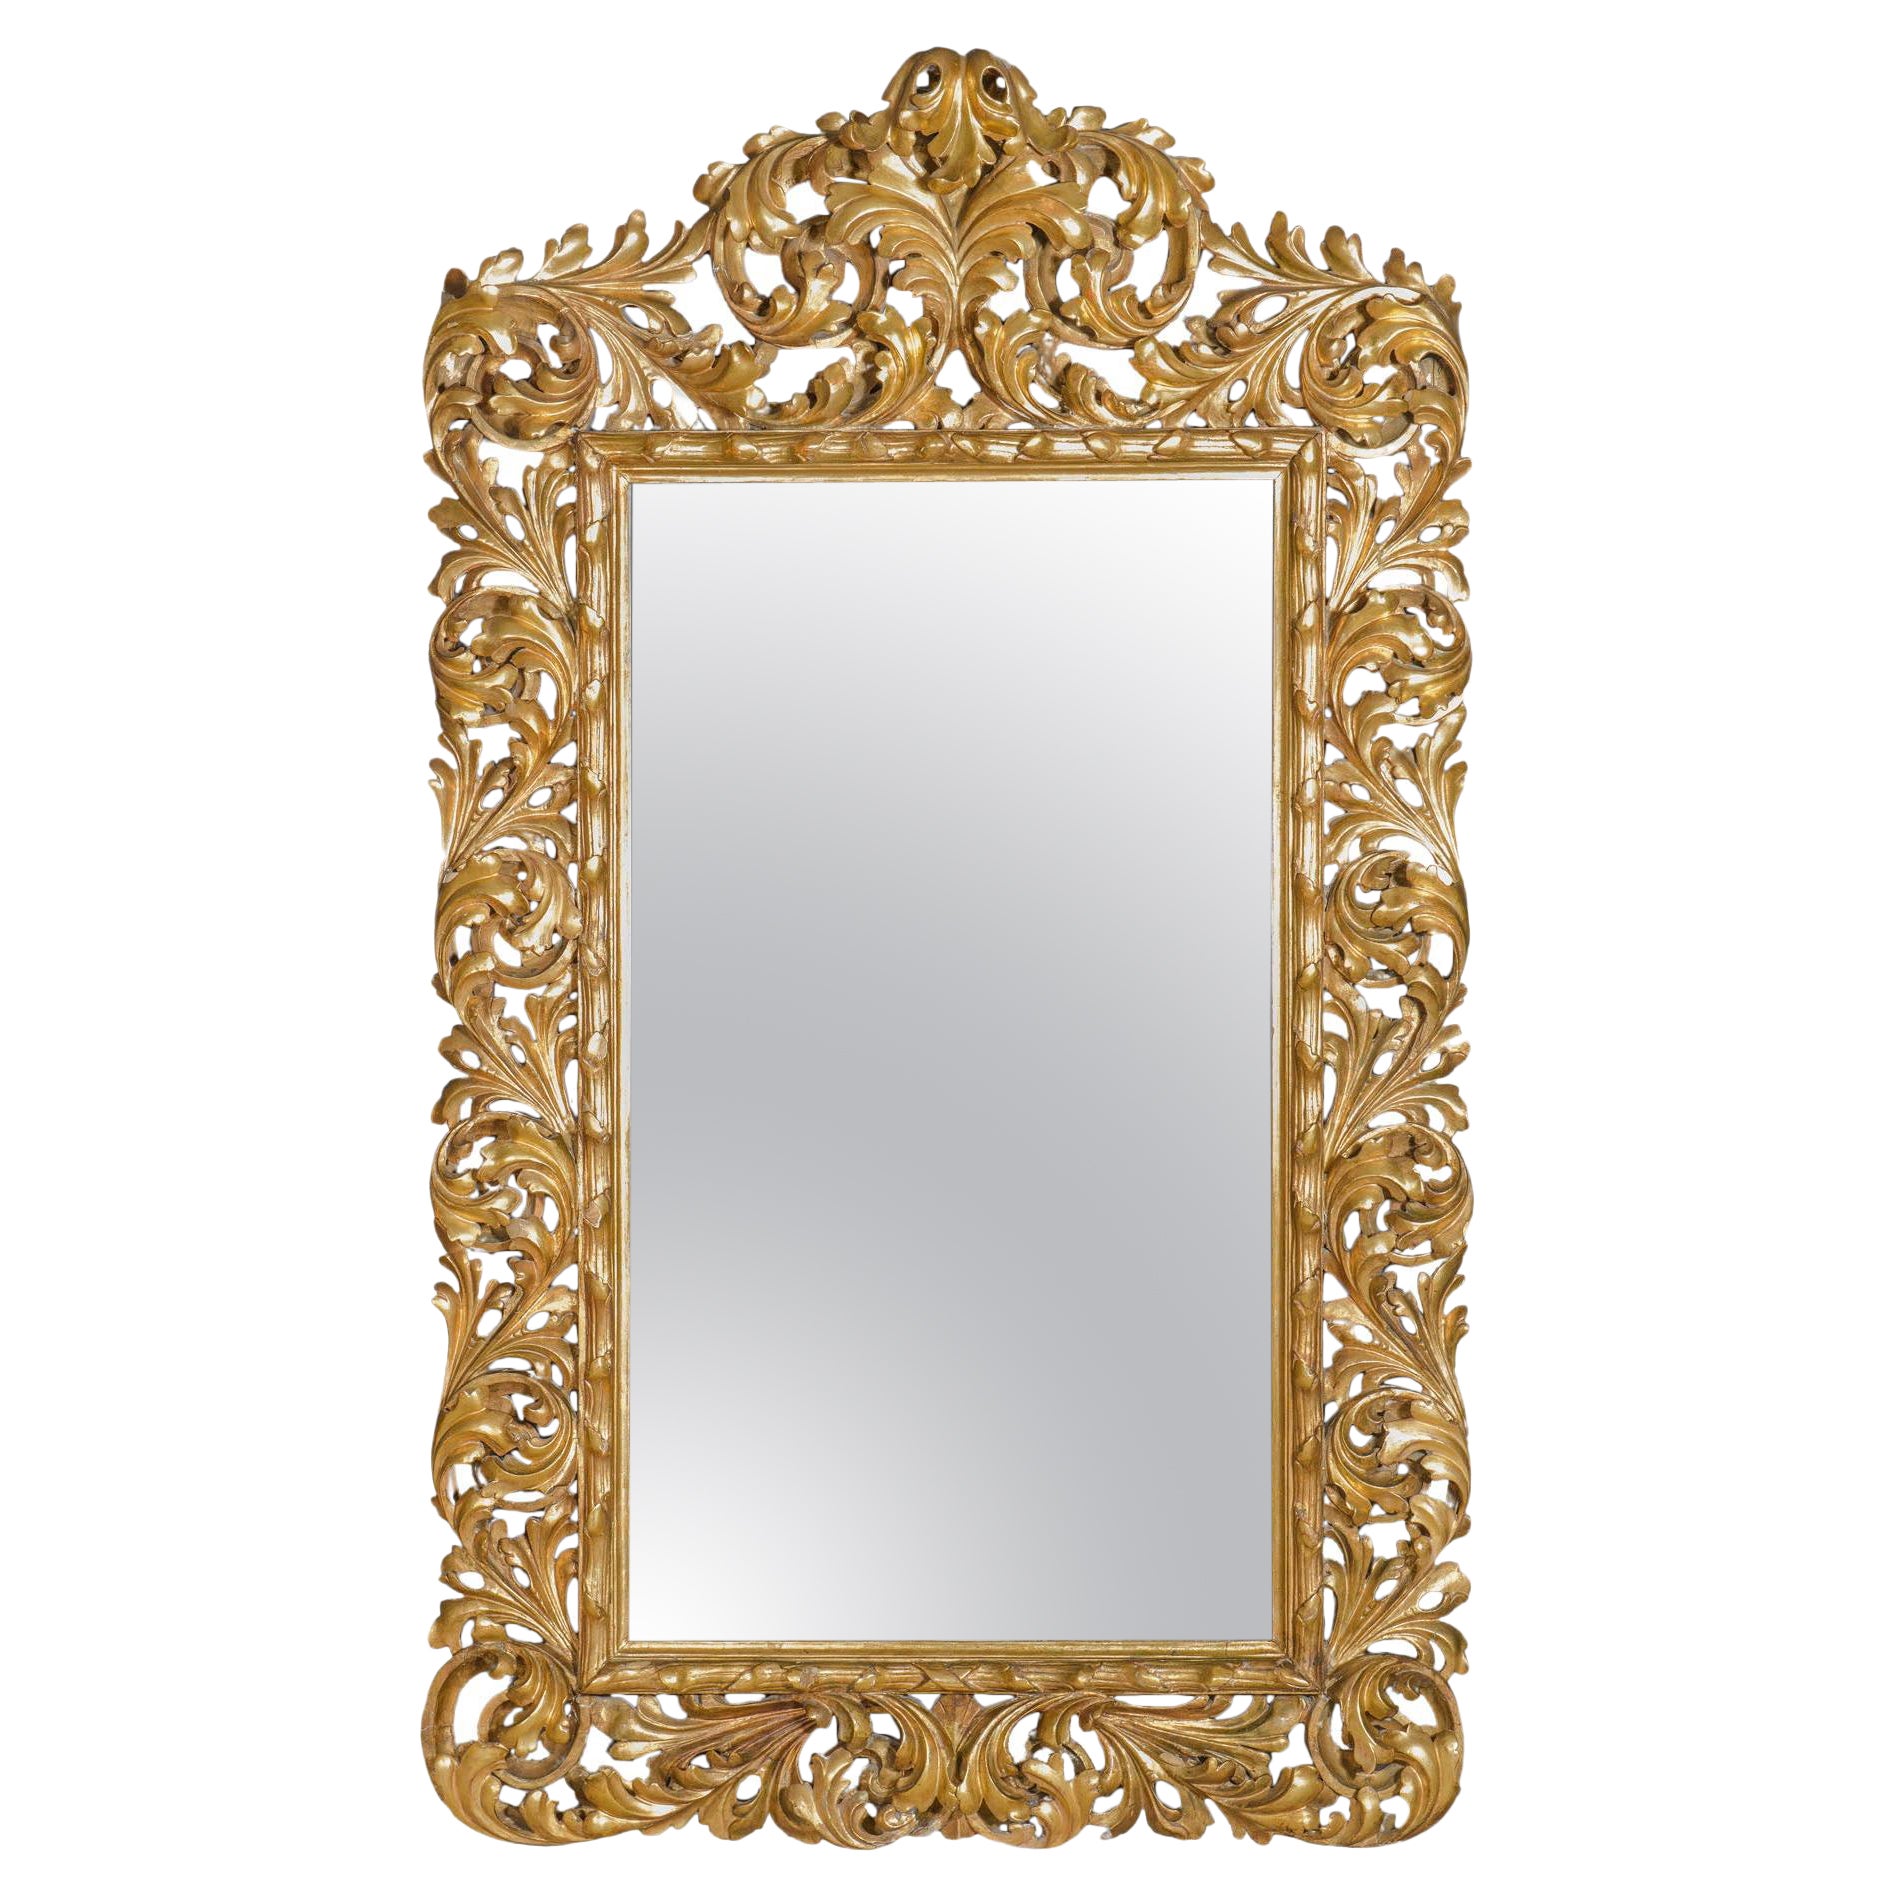 Grand miroir doré italien du XVIIIe siècle 